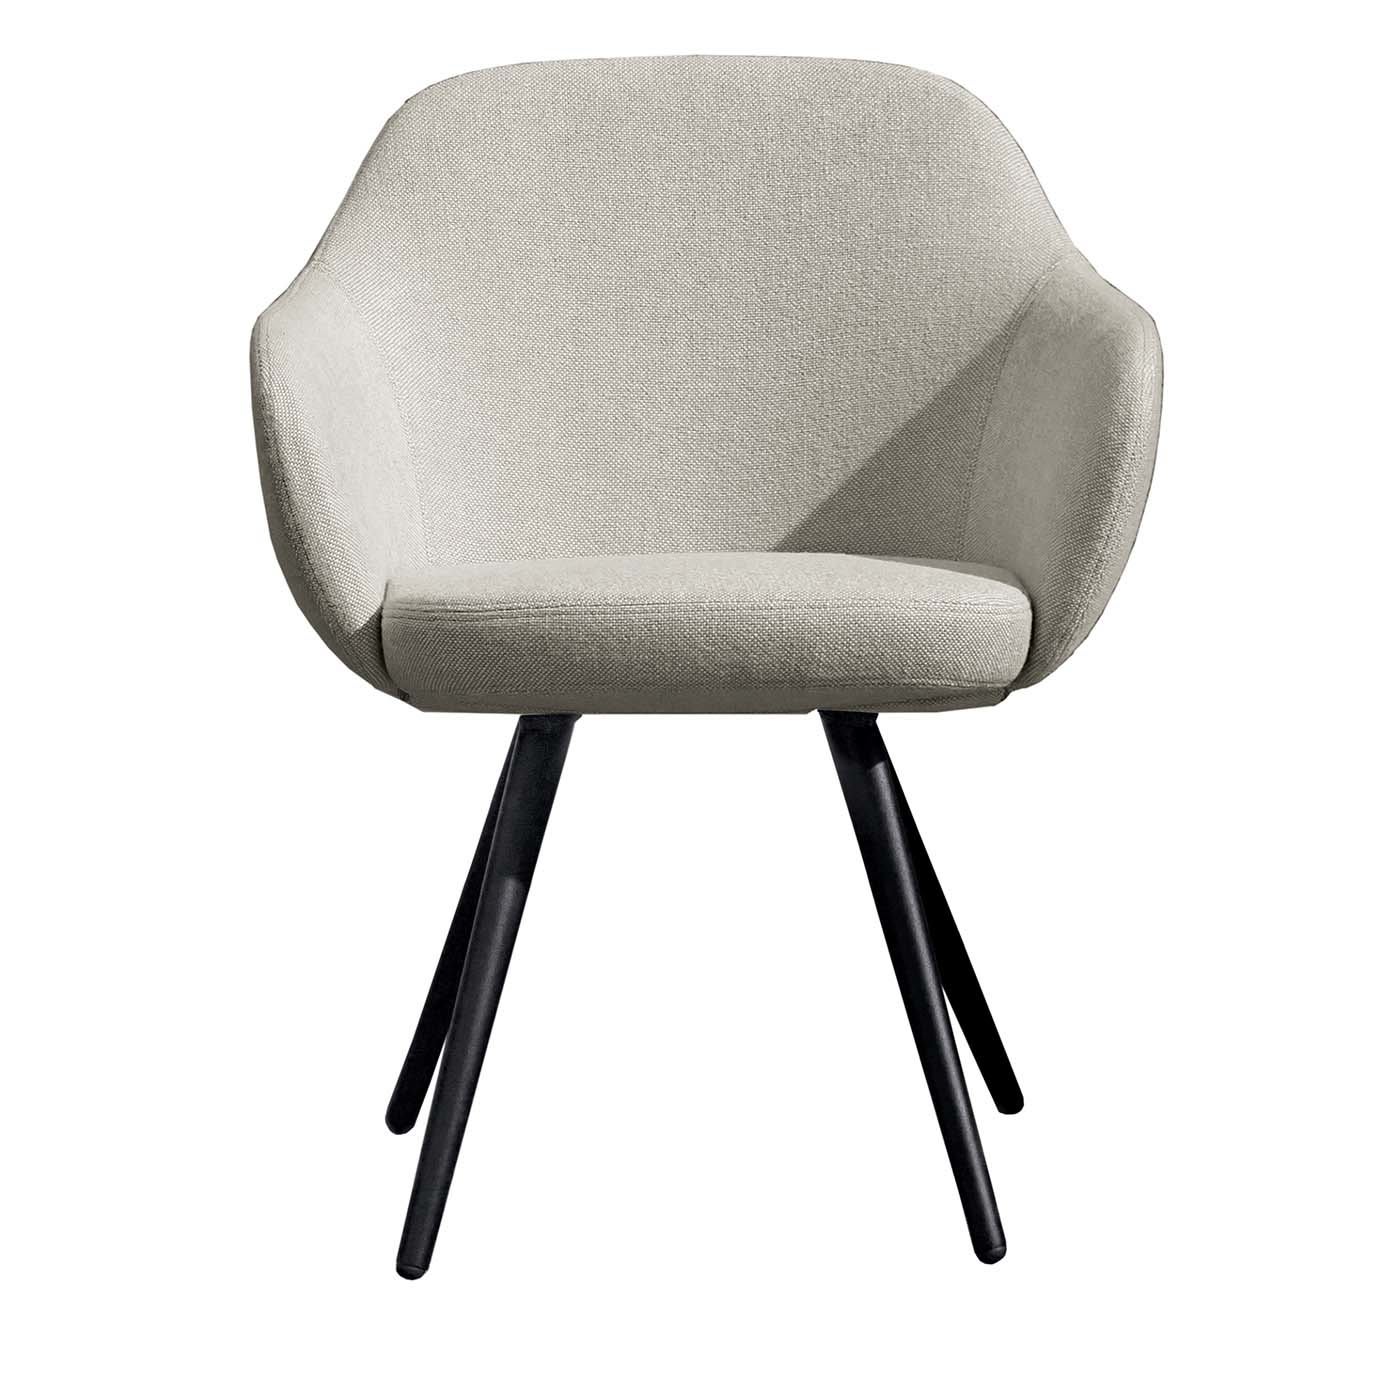 Cadira Cone-Shaped White Chair with Armrests - Società Vetraria Trevigiana